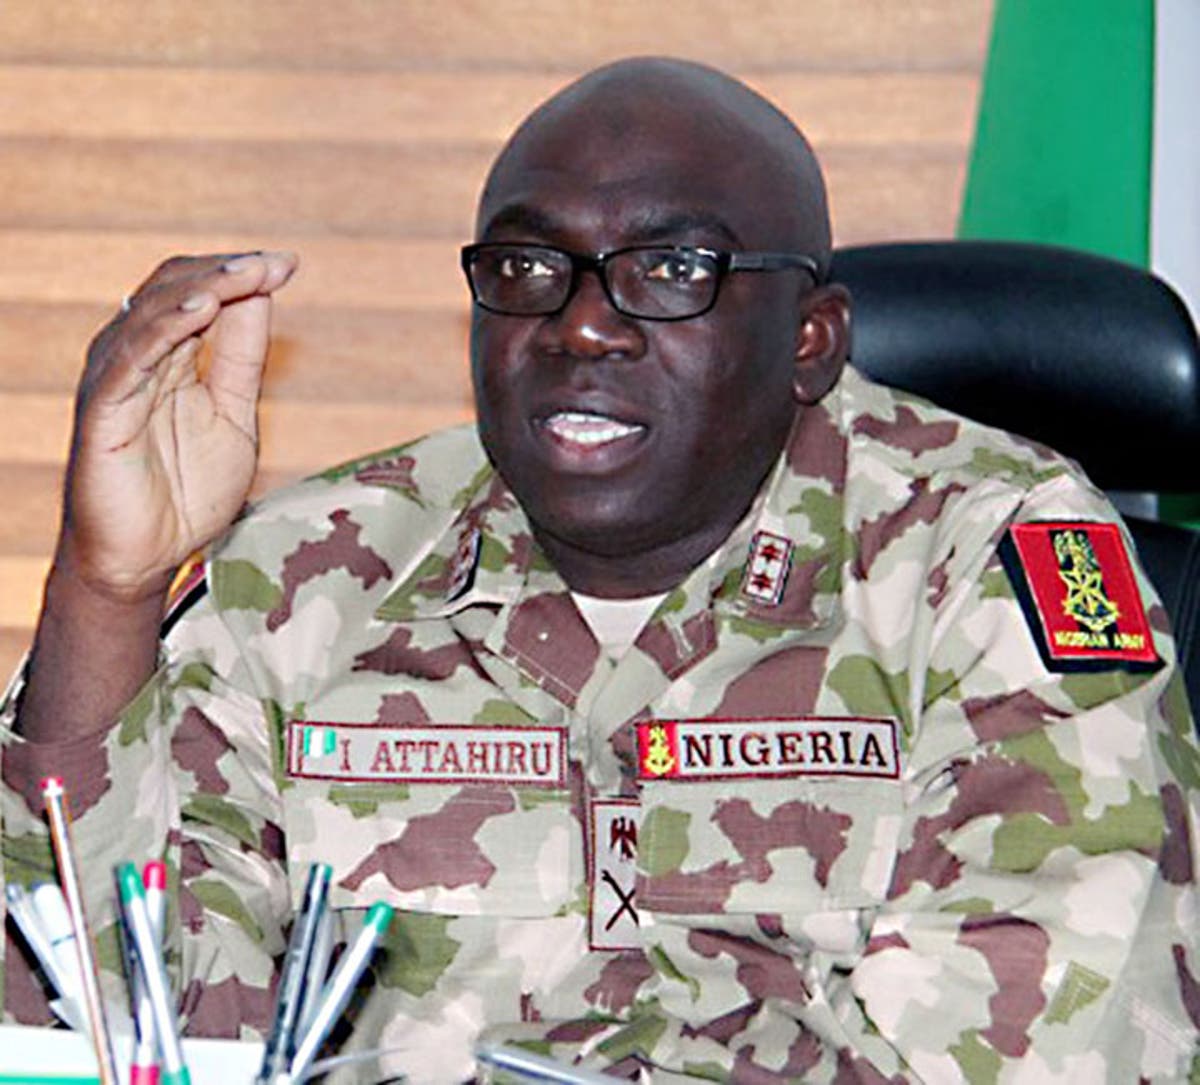 Nigeria Chief of Army Staff, Ibrahim Attahiru who died in a plane crash, in Kaduna, on Friday, May 21, 2021.